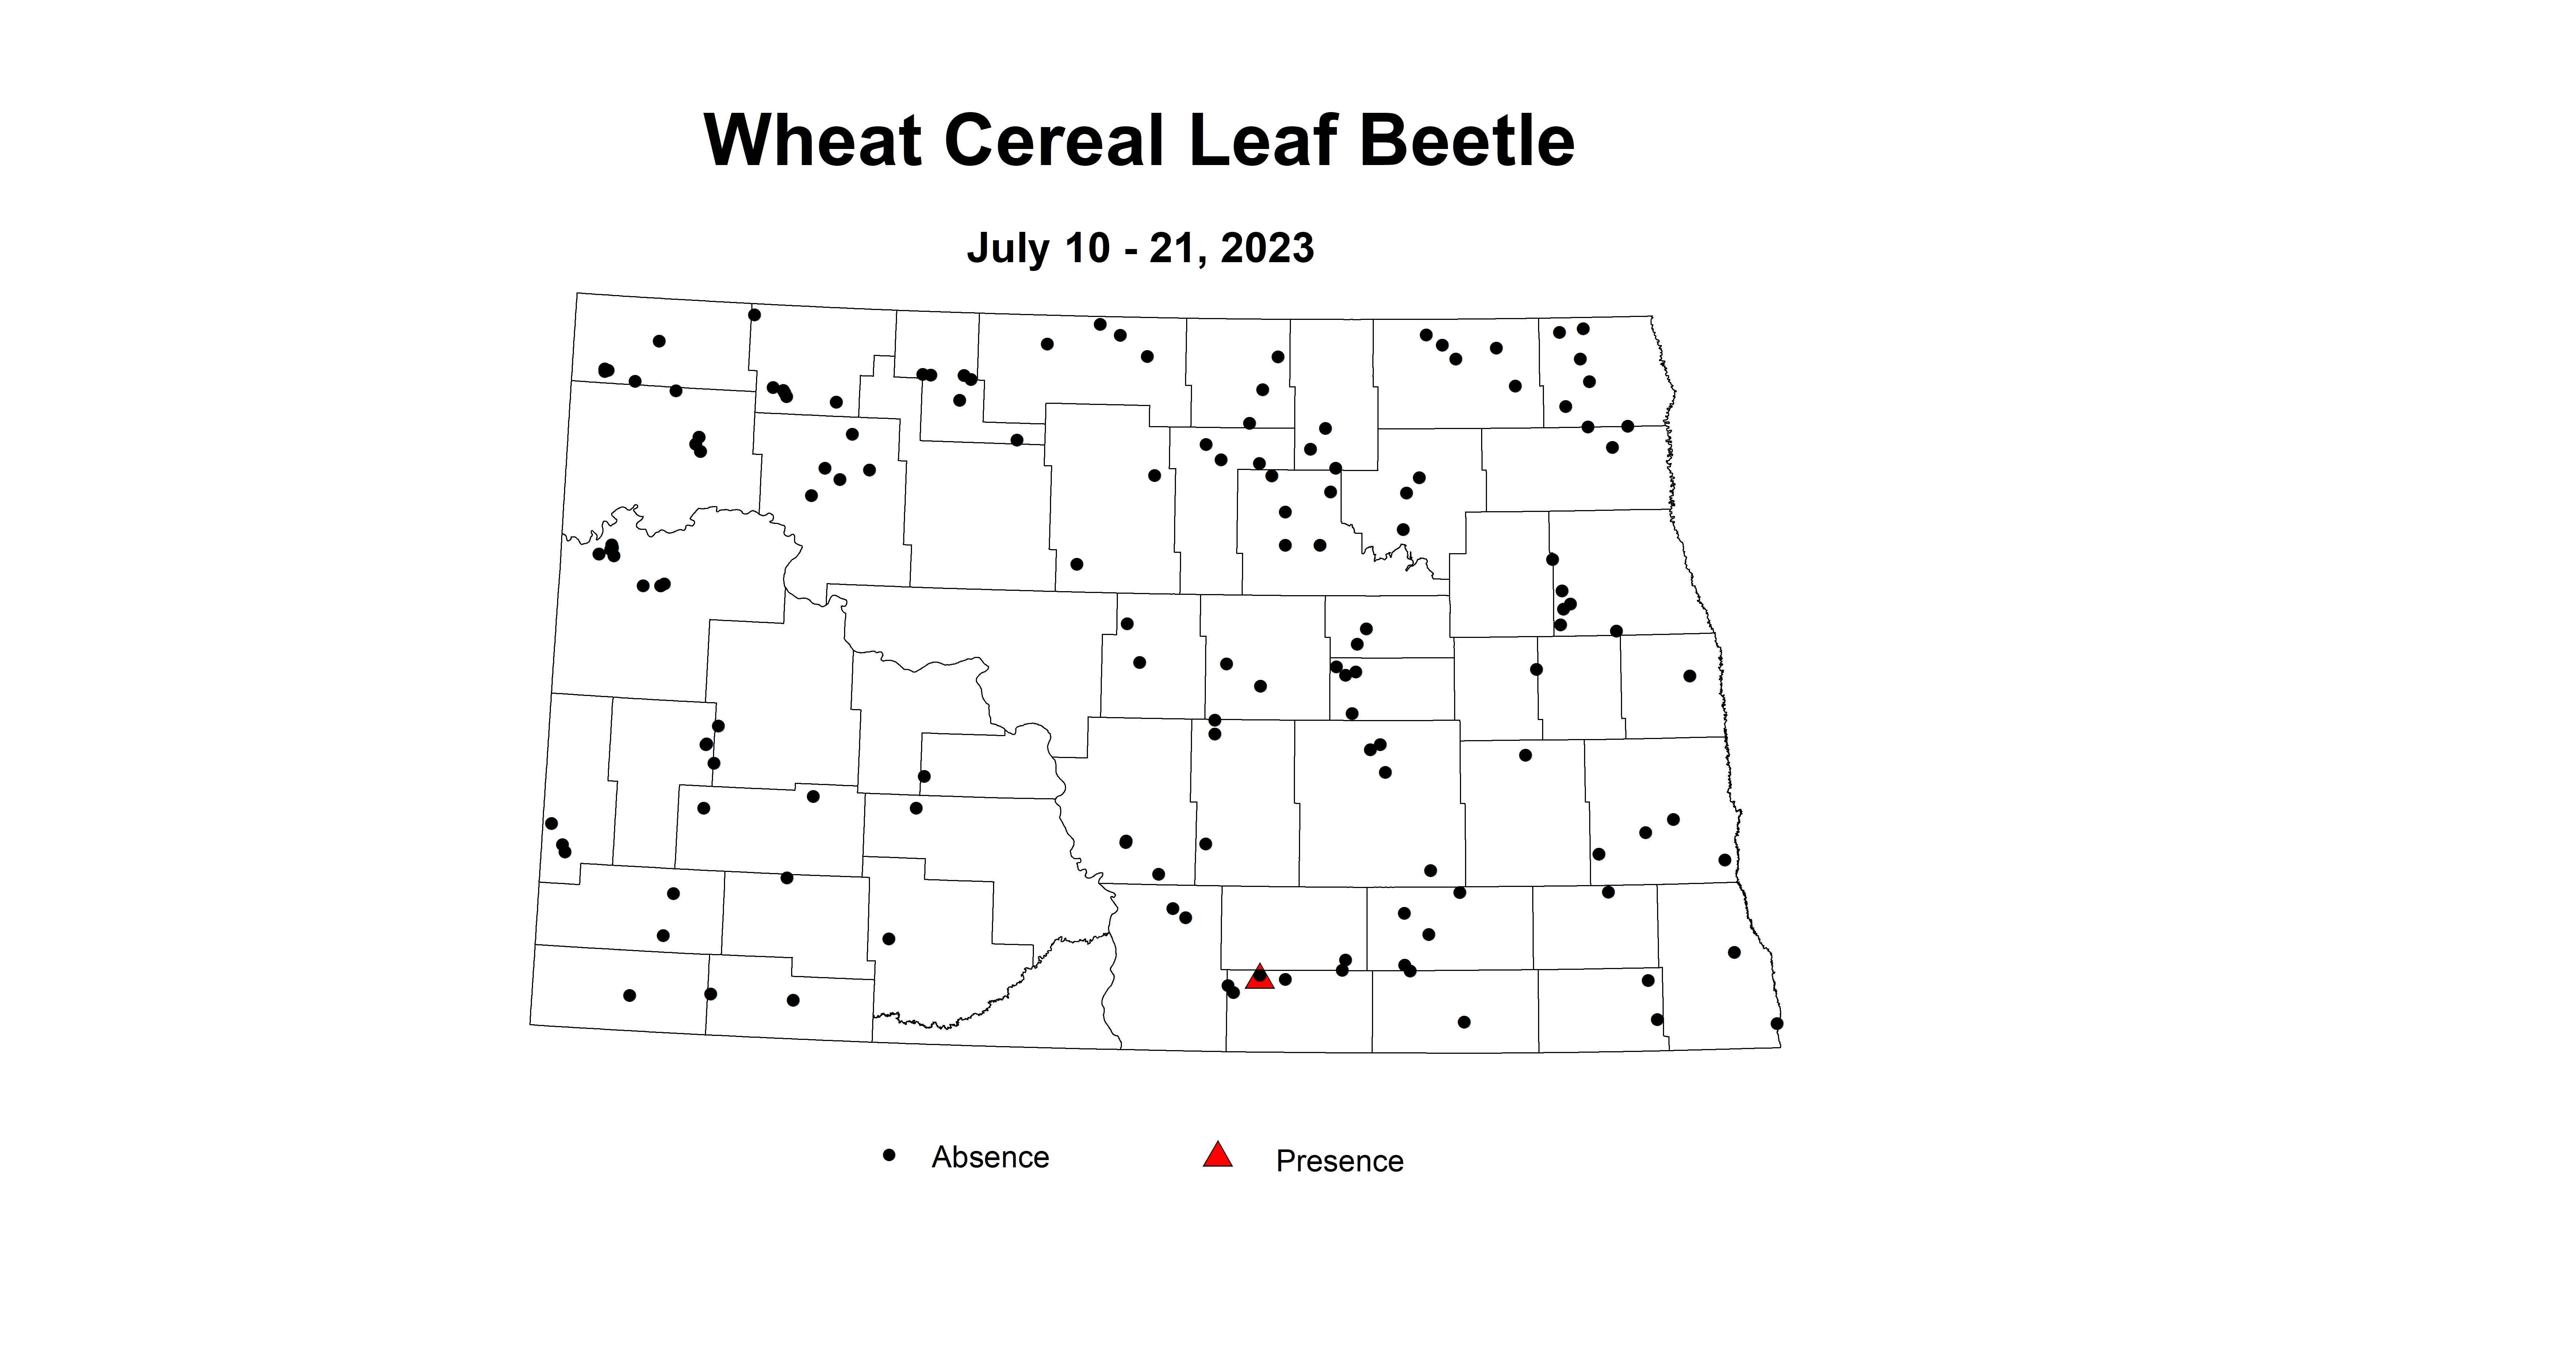 wheat cereal leaf beetle July 10-21 2023